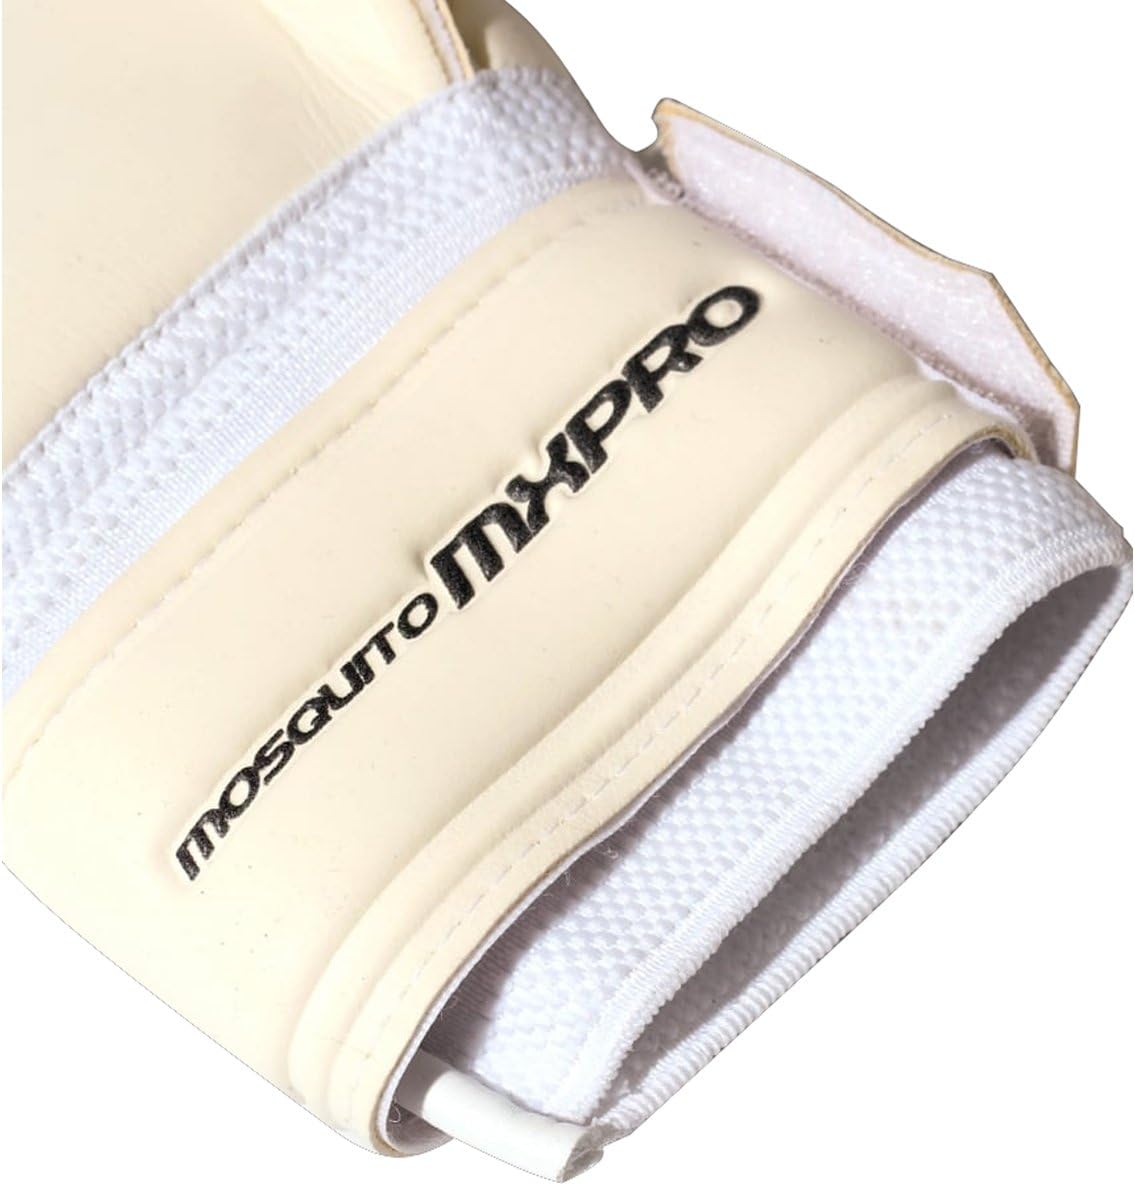 Mosquito MX PRO Goalkeeper Glove - Optimum